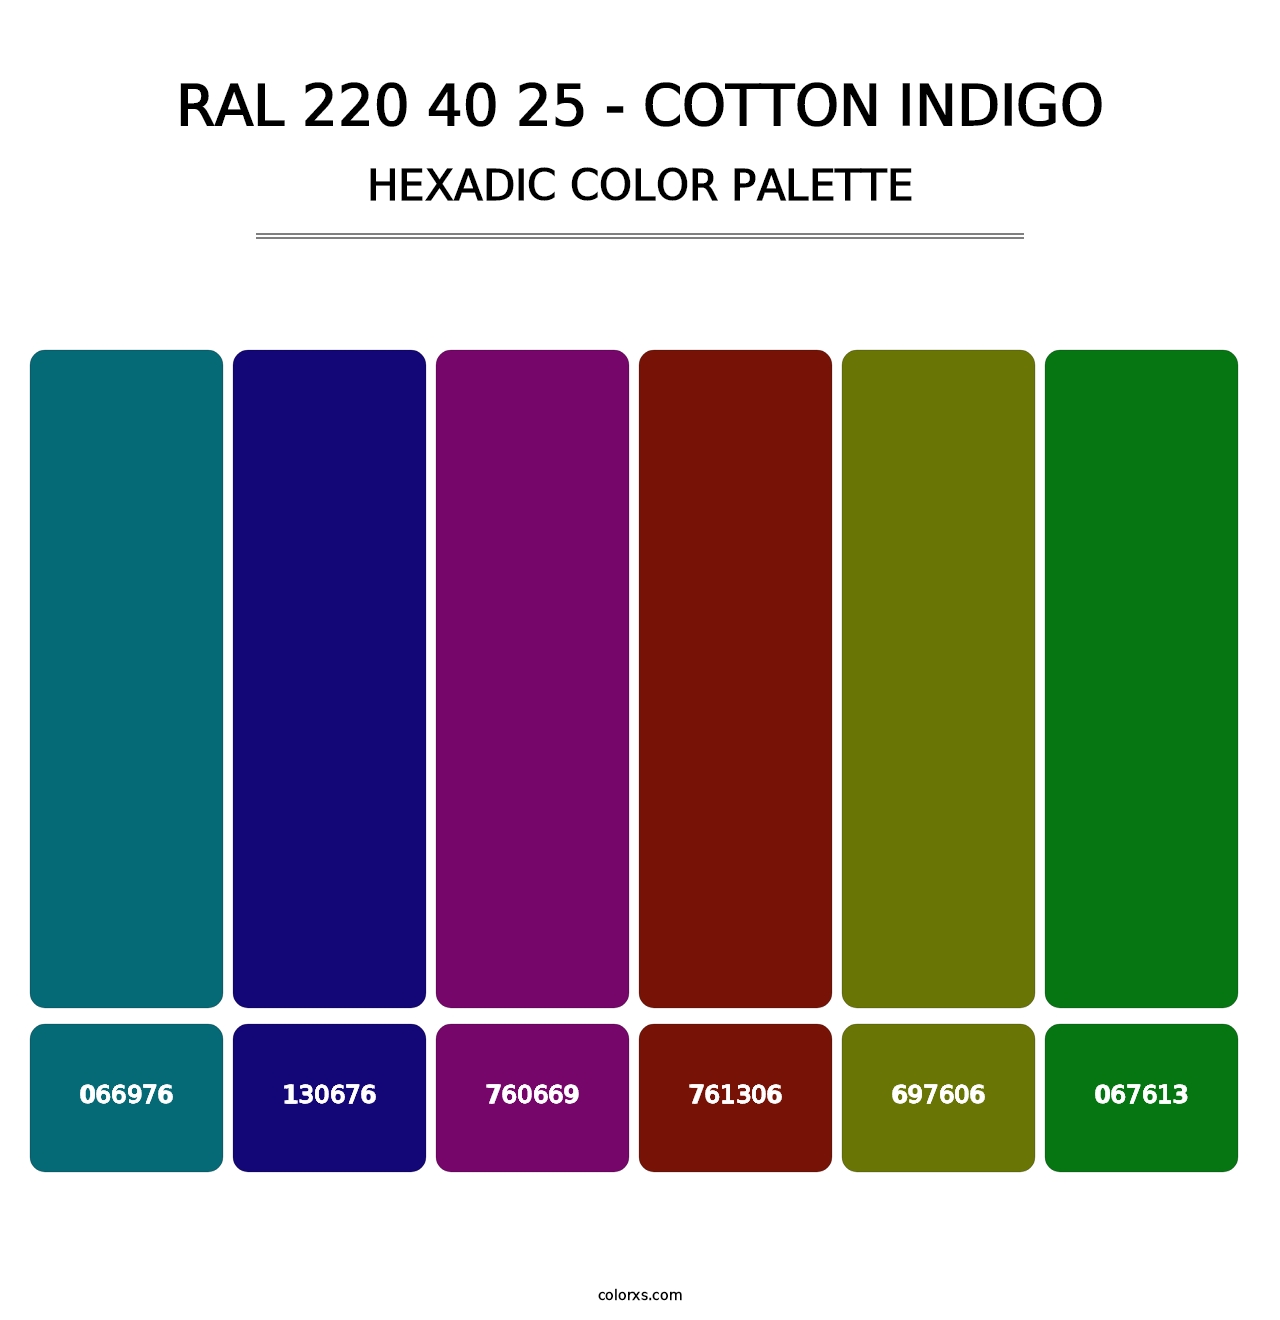 RAL 220 40 25 - Cotton Indigo - Hexadic Color Palette